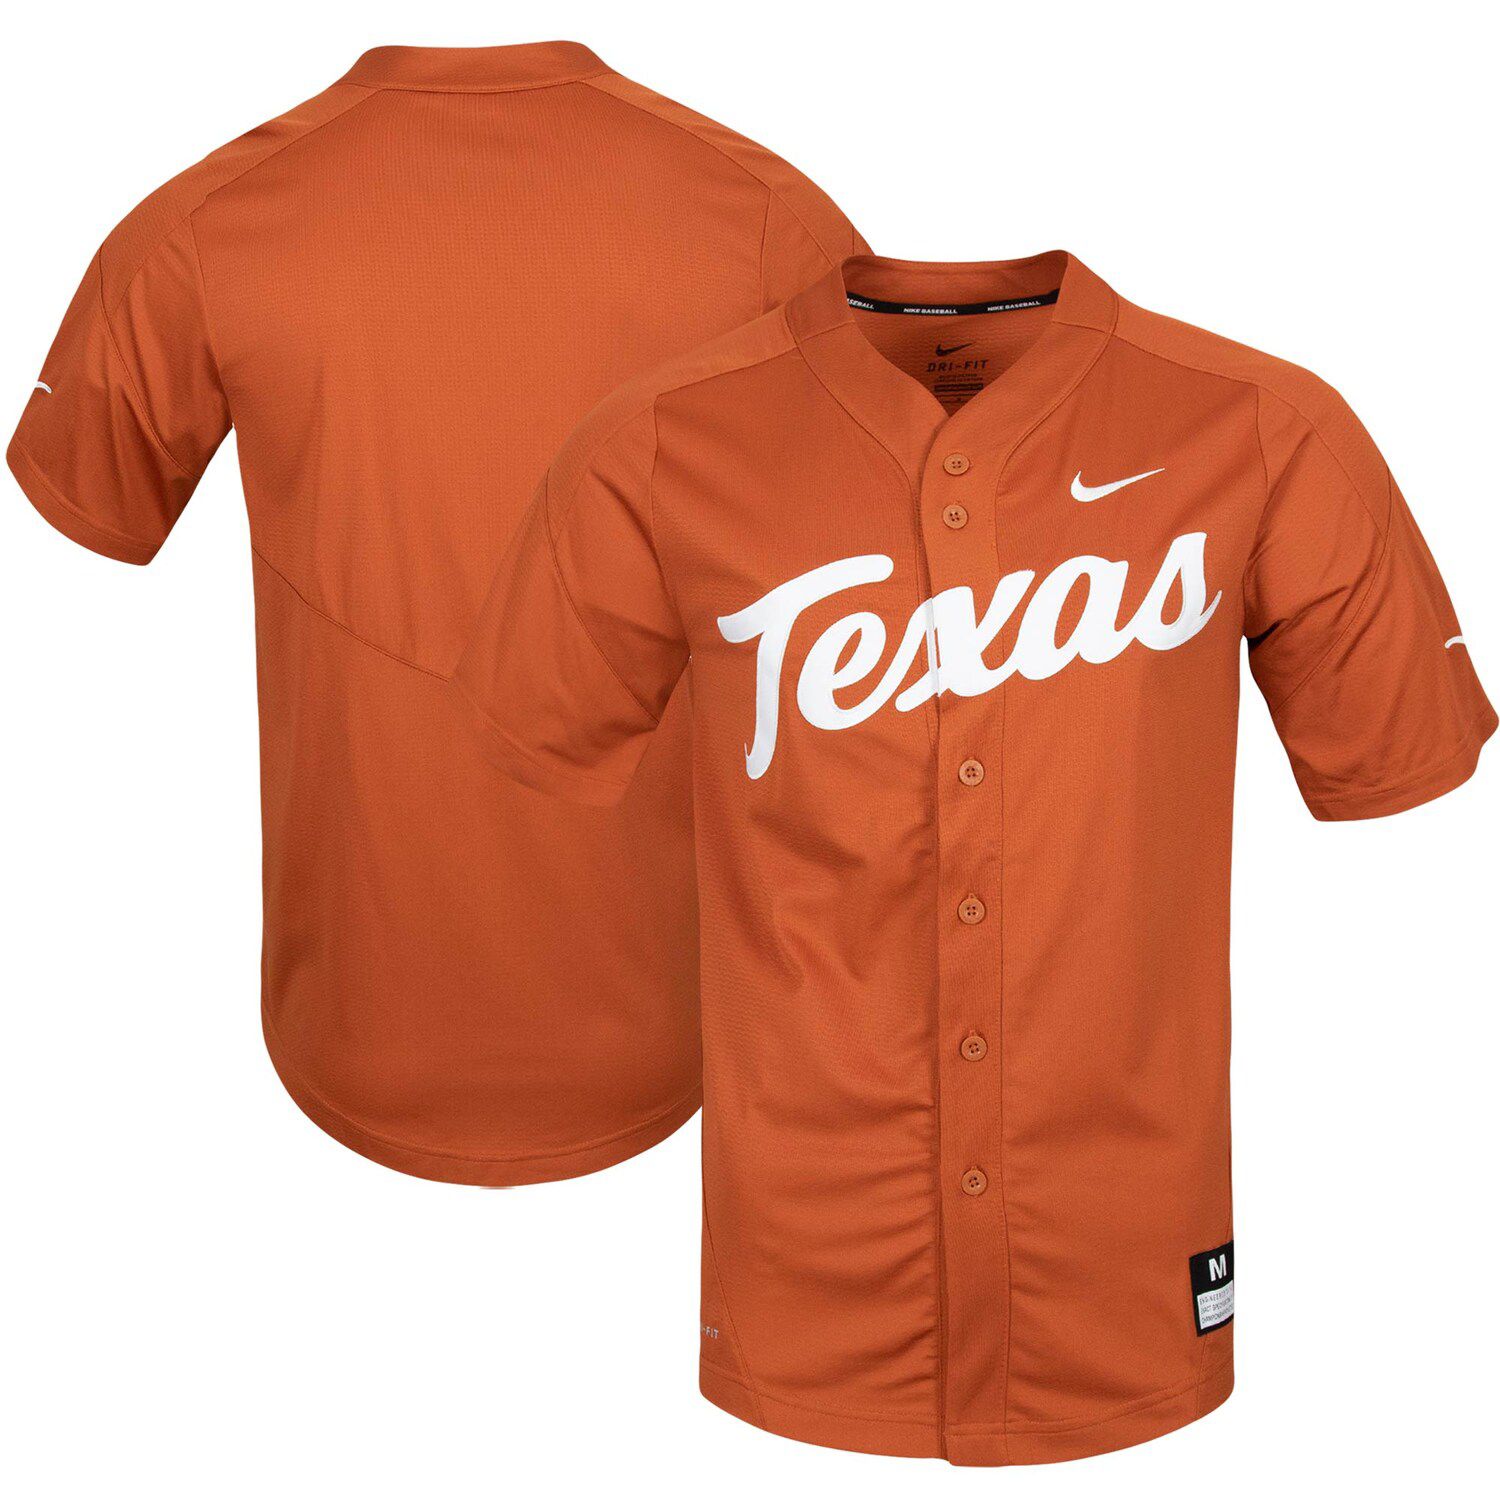 Men's Nike Texas Orange Texas Longhorns 